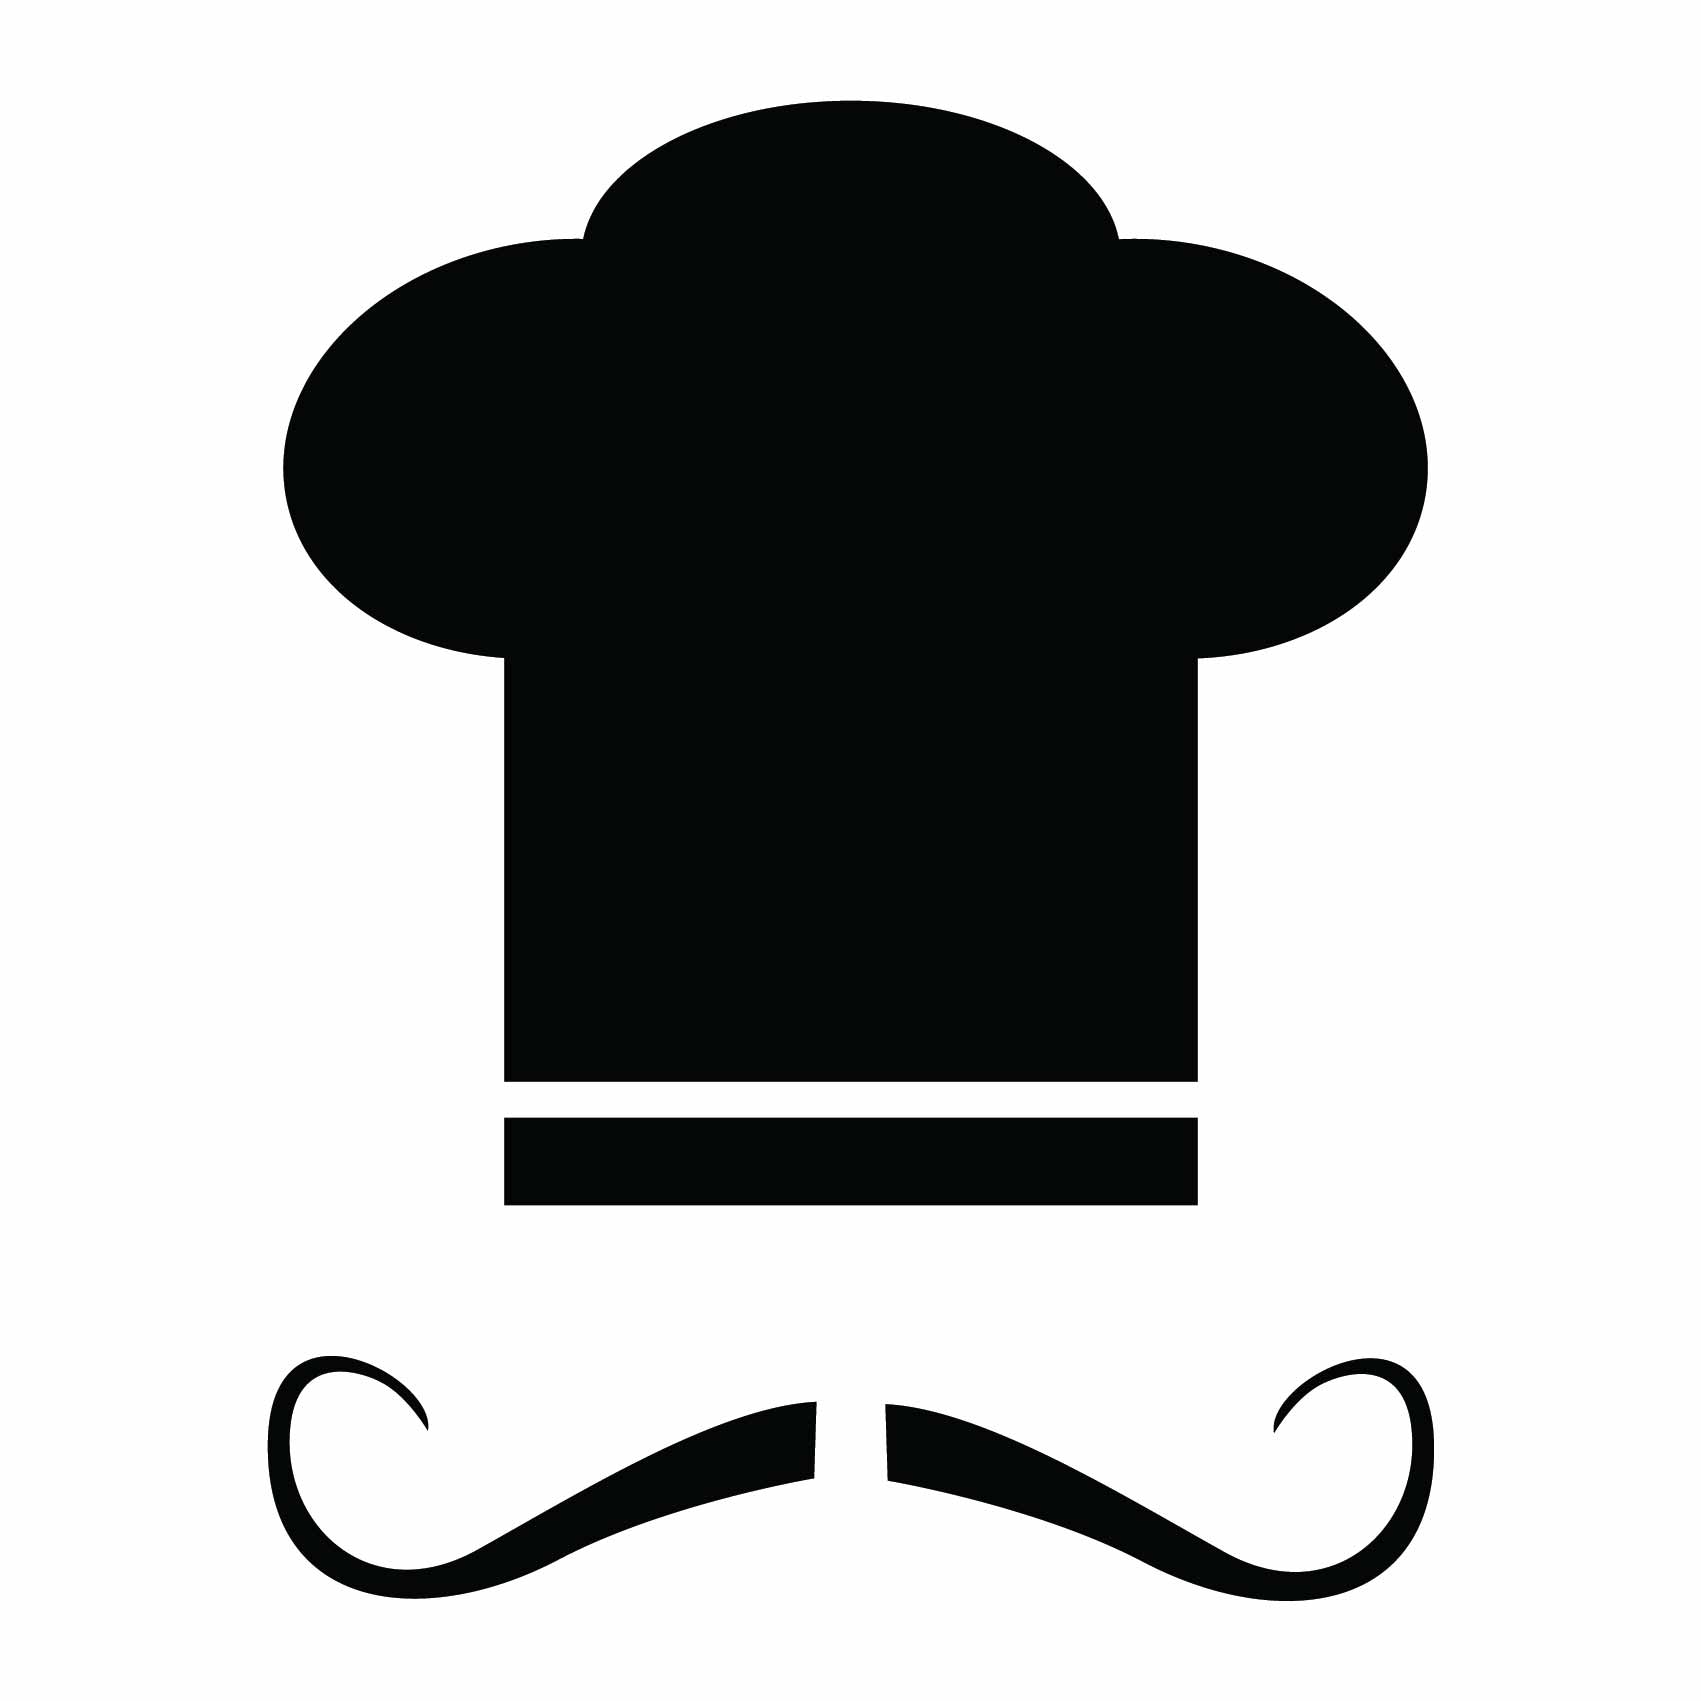 stickers-chef-cuisinier-ref67cuisine-stickers-muraux-cuisine-autocollant-deco-cuisine-chambre-salon-sticker-mural-decoration-(2)